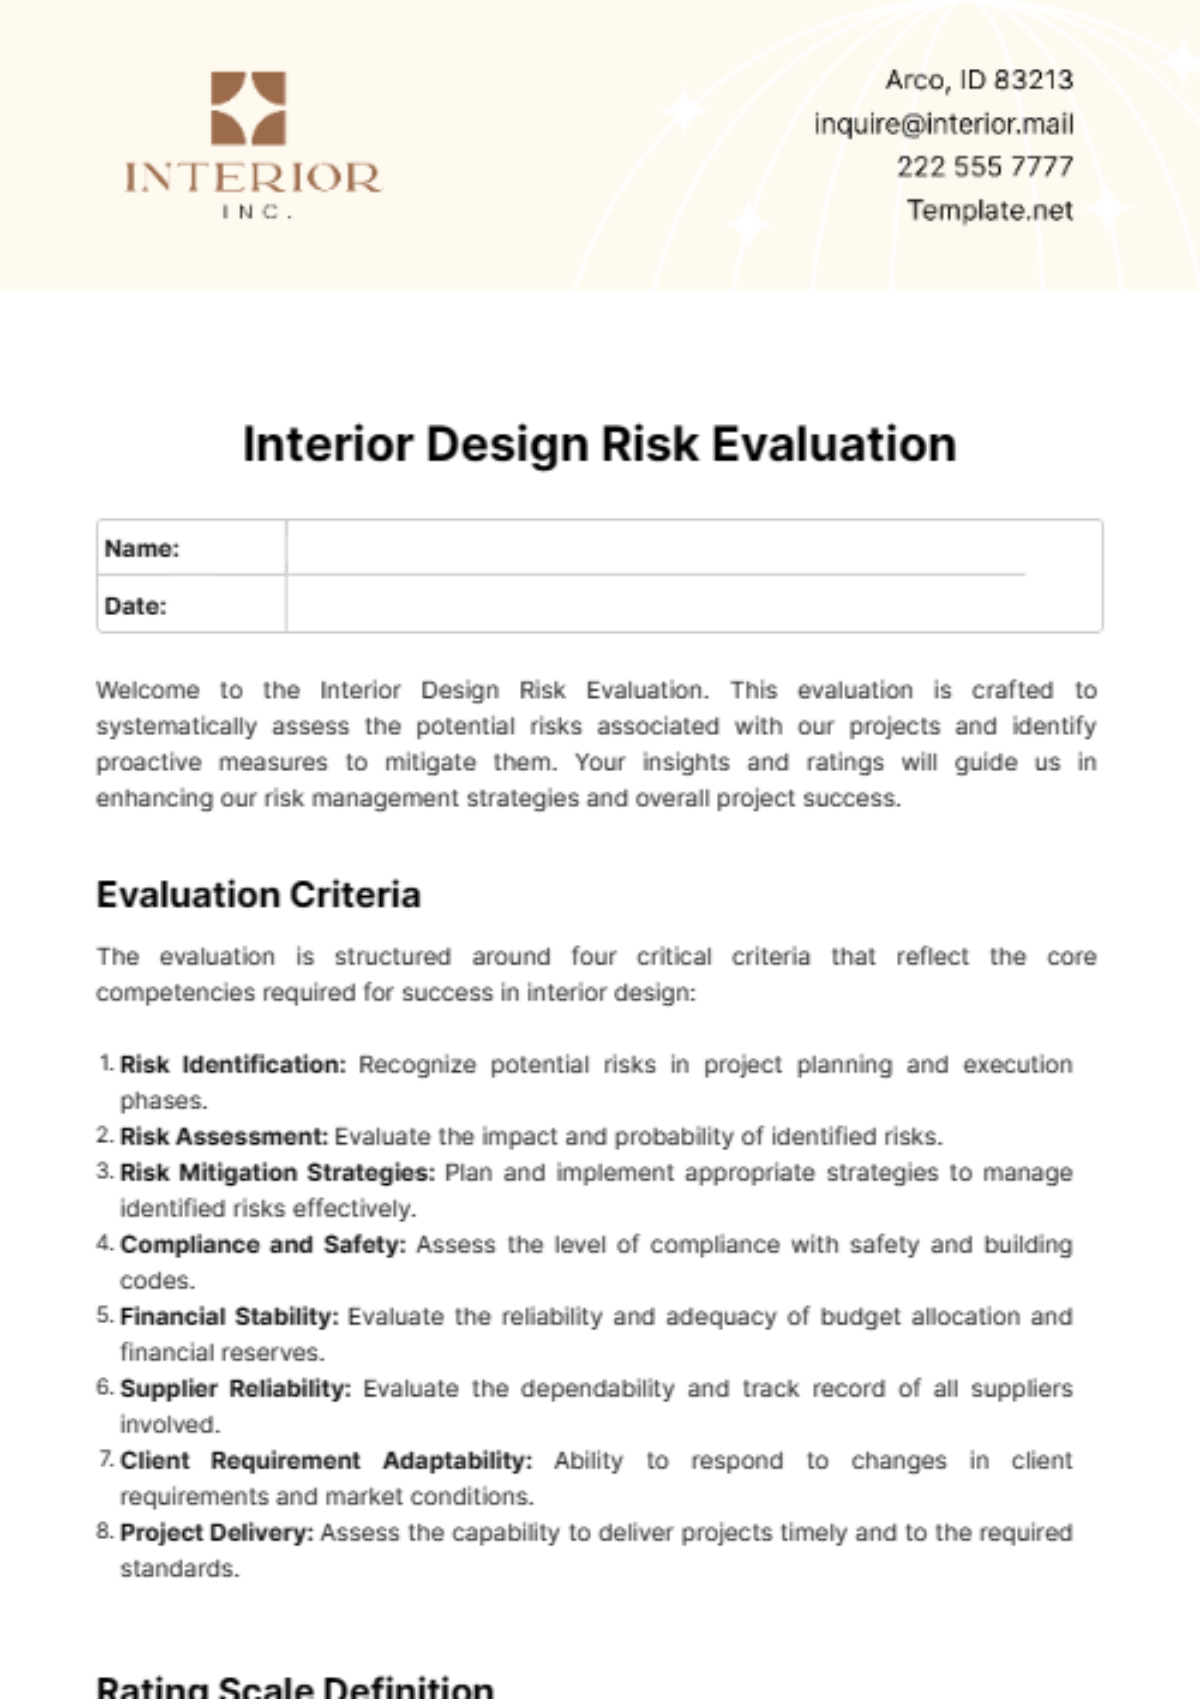 Interior Design Risk Evaluation Template